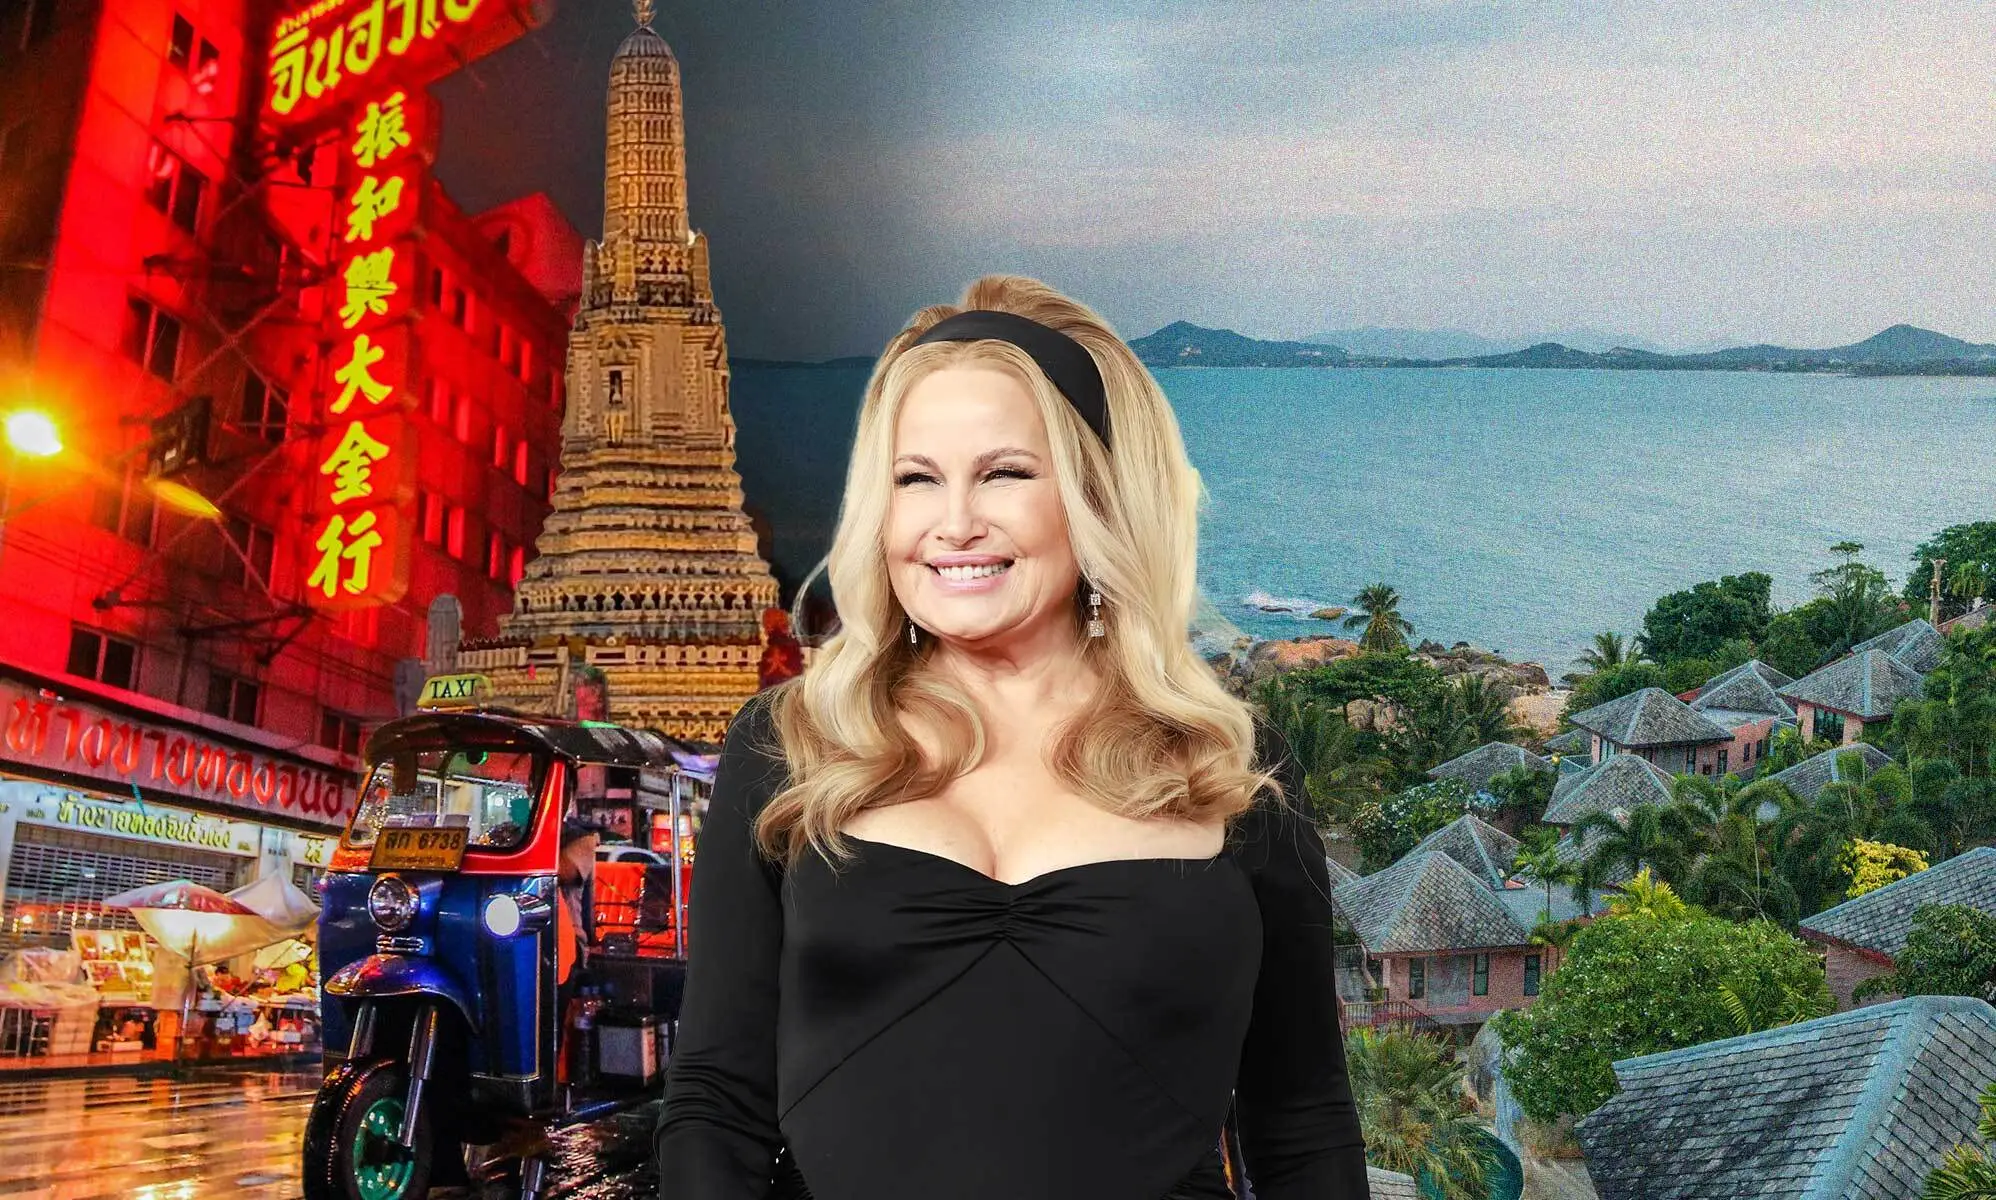 The White Lotus' Season 3: Which Thailand Hotel Will Star?